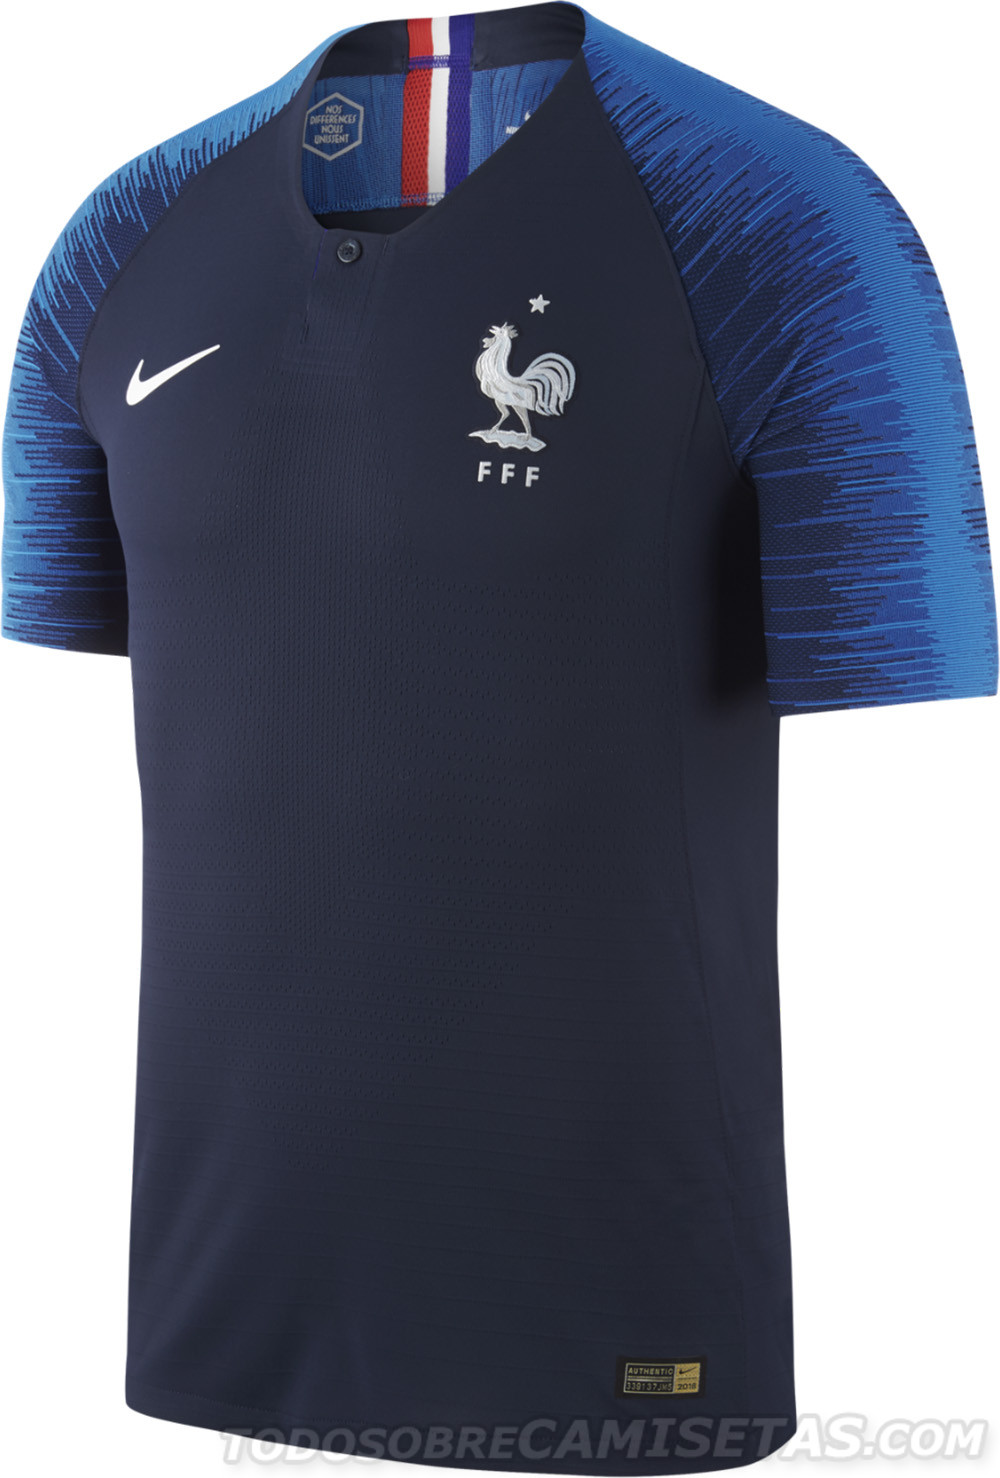 France 2018 World Cup Nike Kits